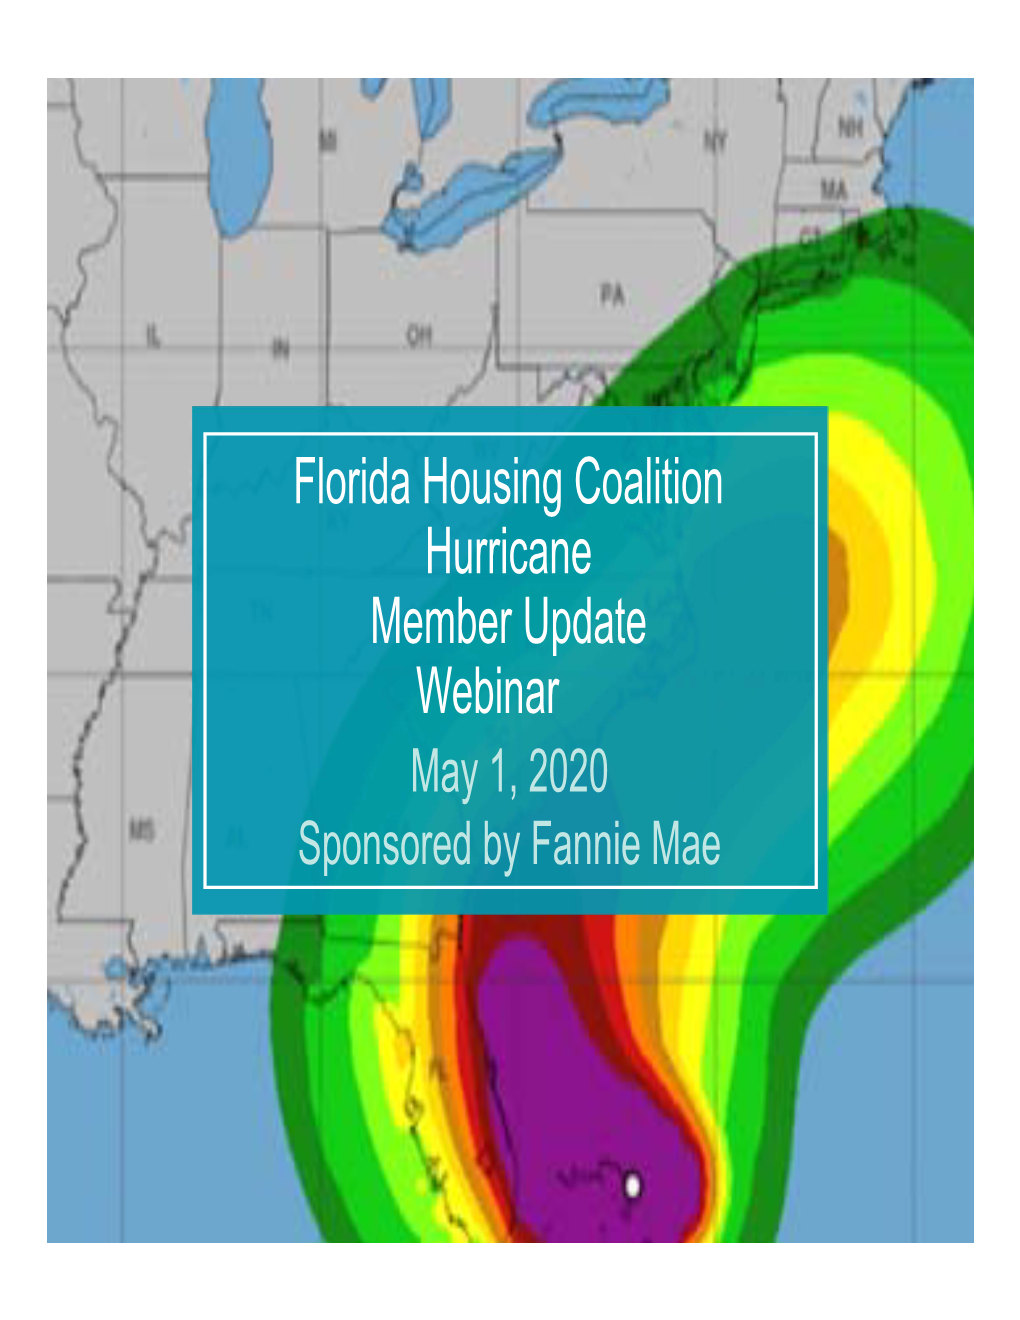 Florida Housing Coalition Hurricane Member Update Webinar May 1, 2020 Sponsored by Fannie Mae AGENDA